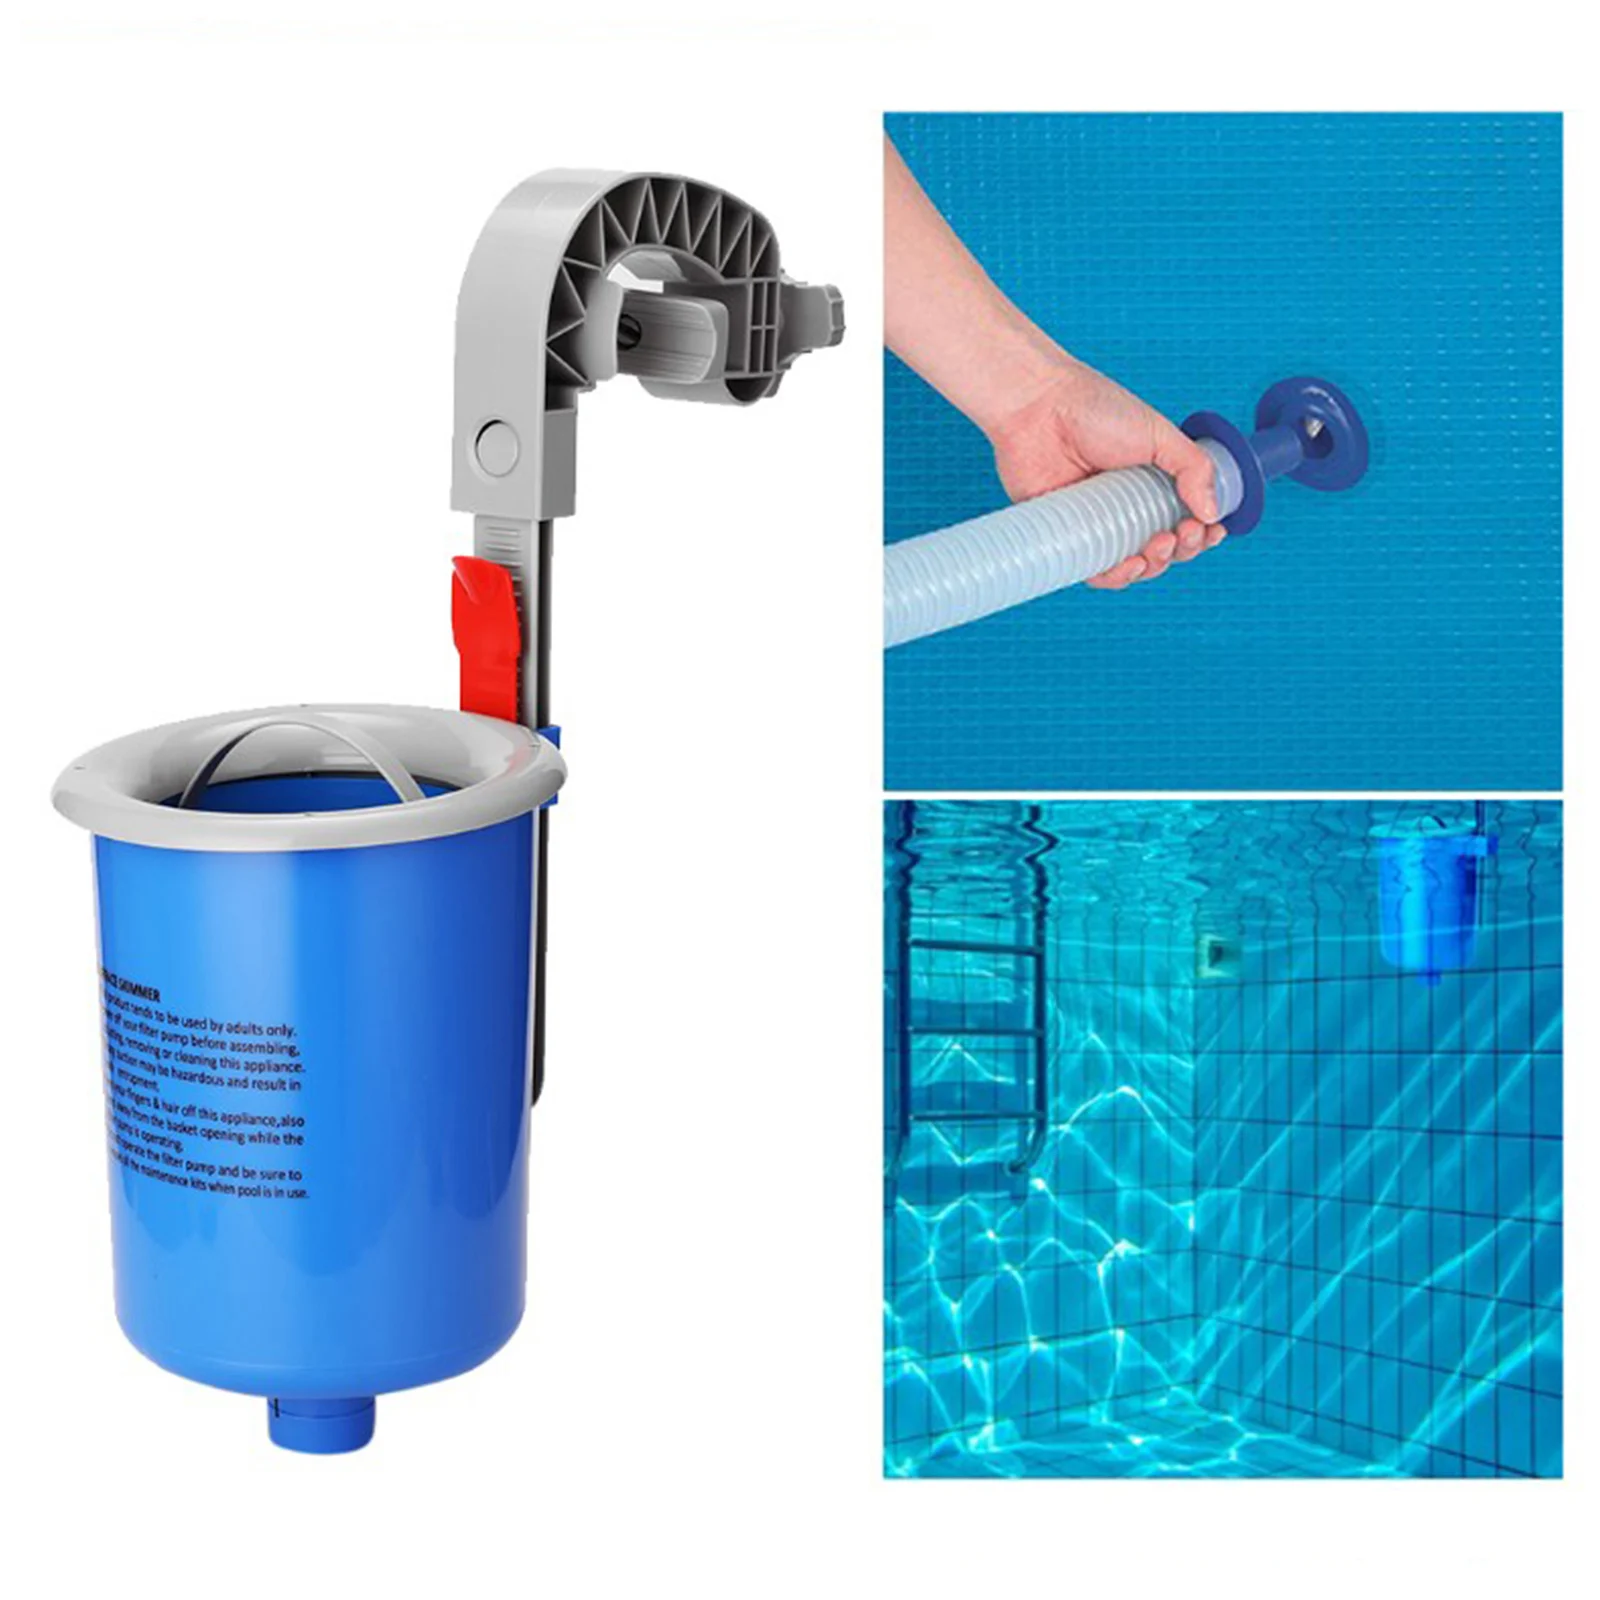 Limpador automático de detritos para piscina, limpeza profissional de piscinas